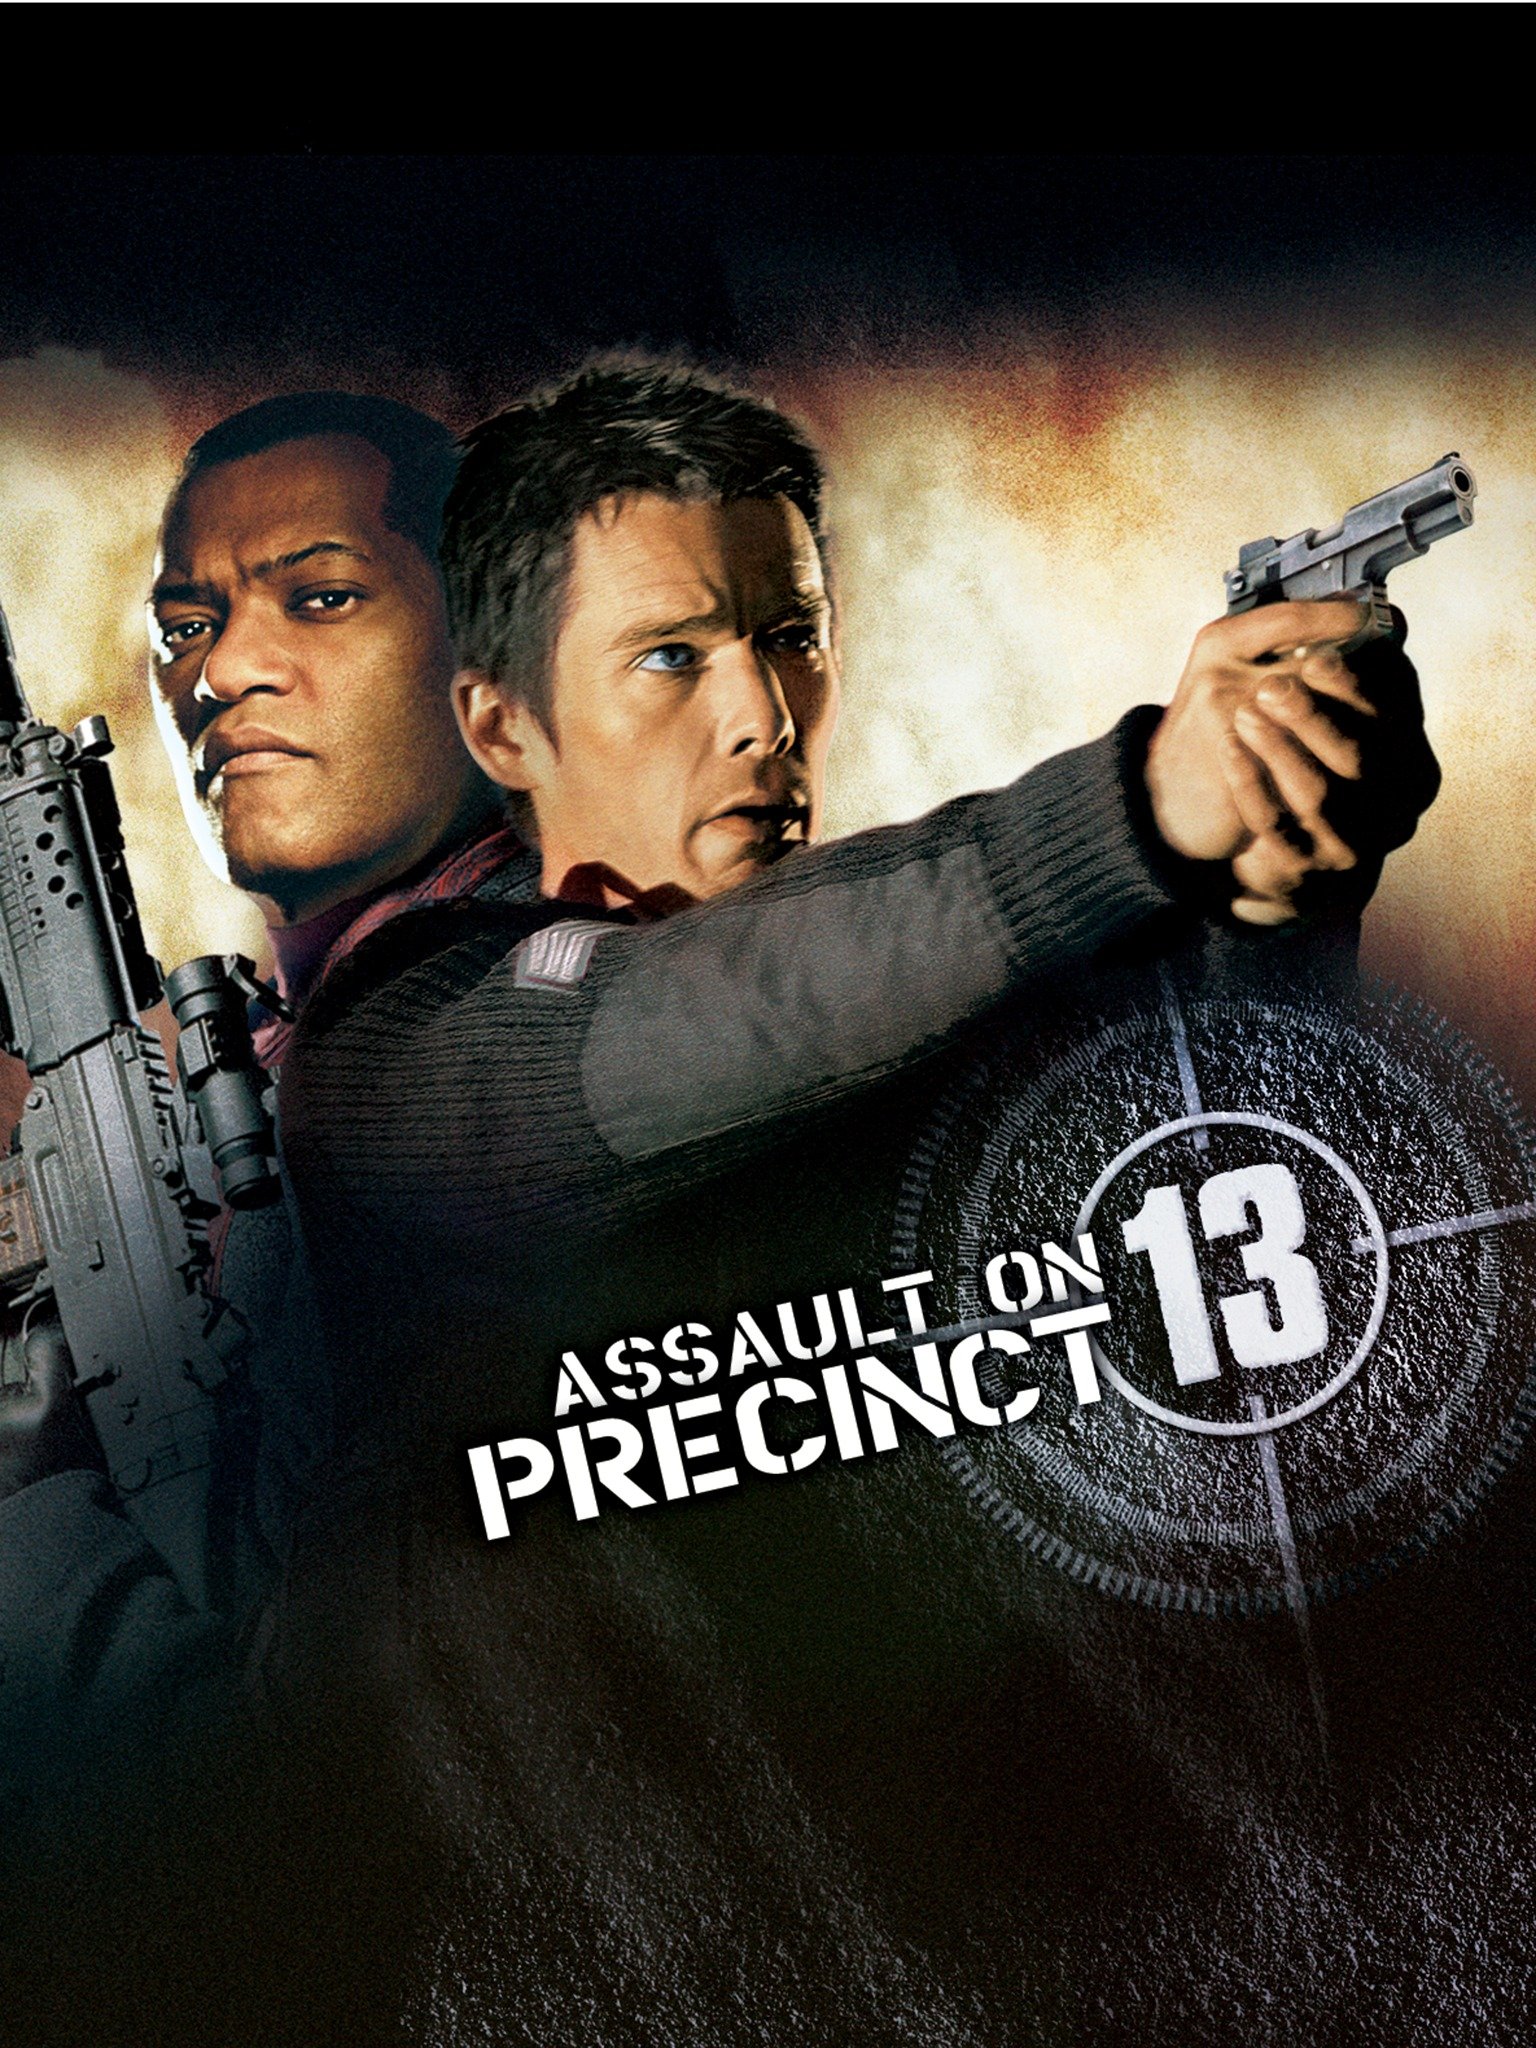 Нападение на 13. Assault on Precinct 13 2005. Нападение на 13-й участок (2005) Постер. Нападение на 13-й участок постеры.